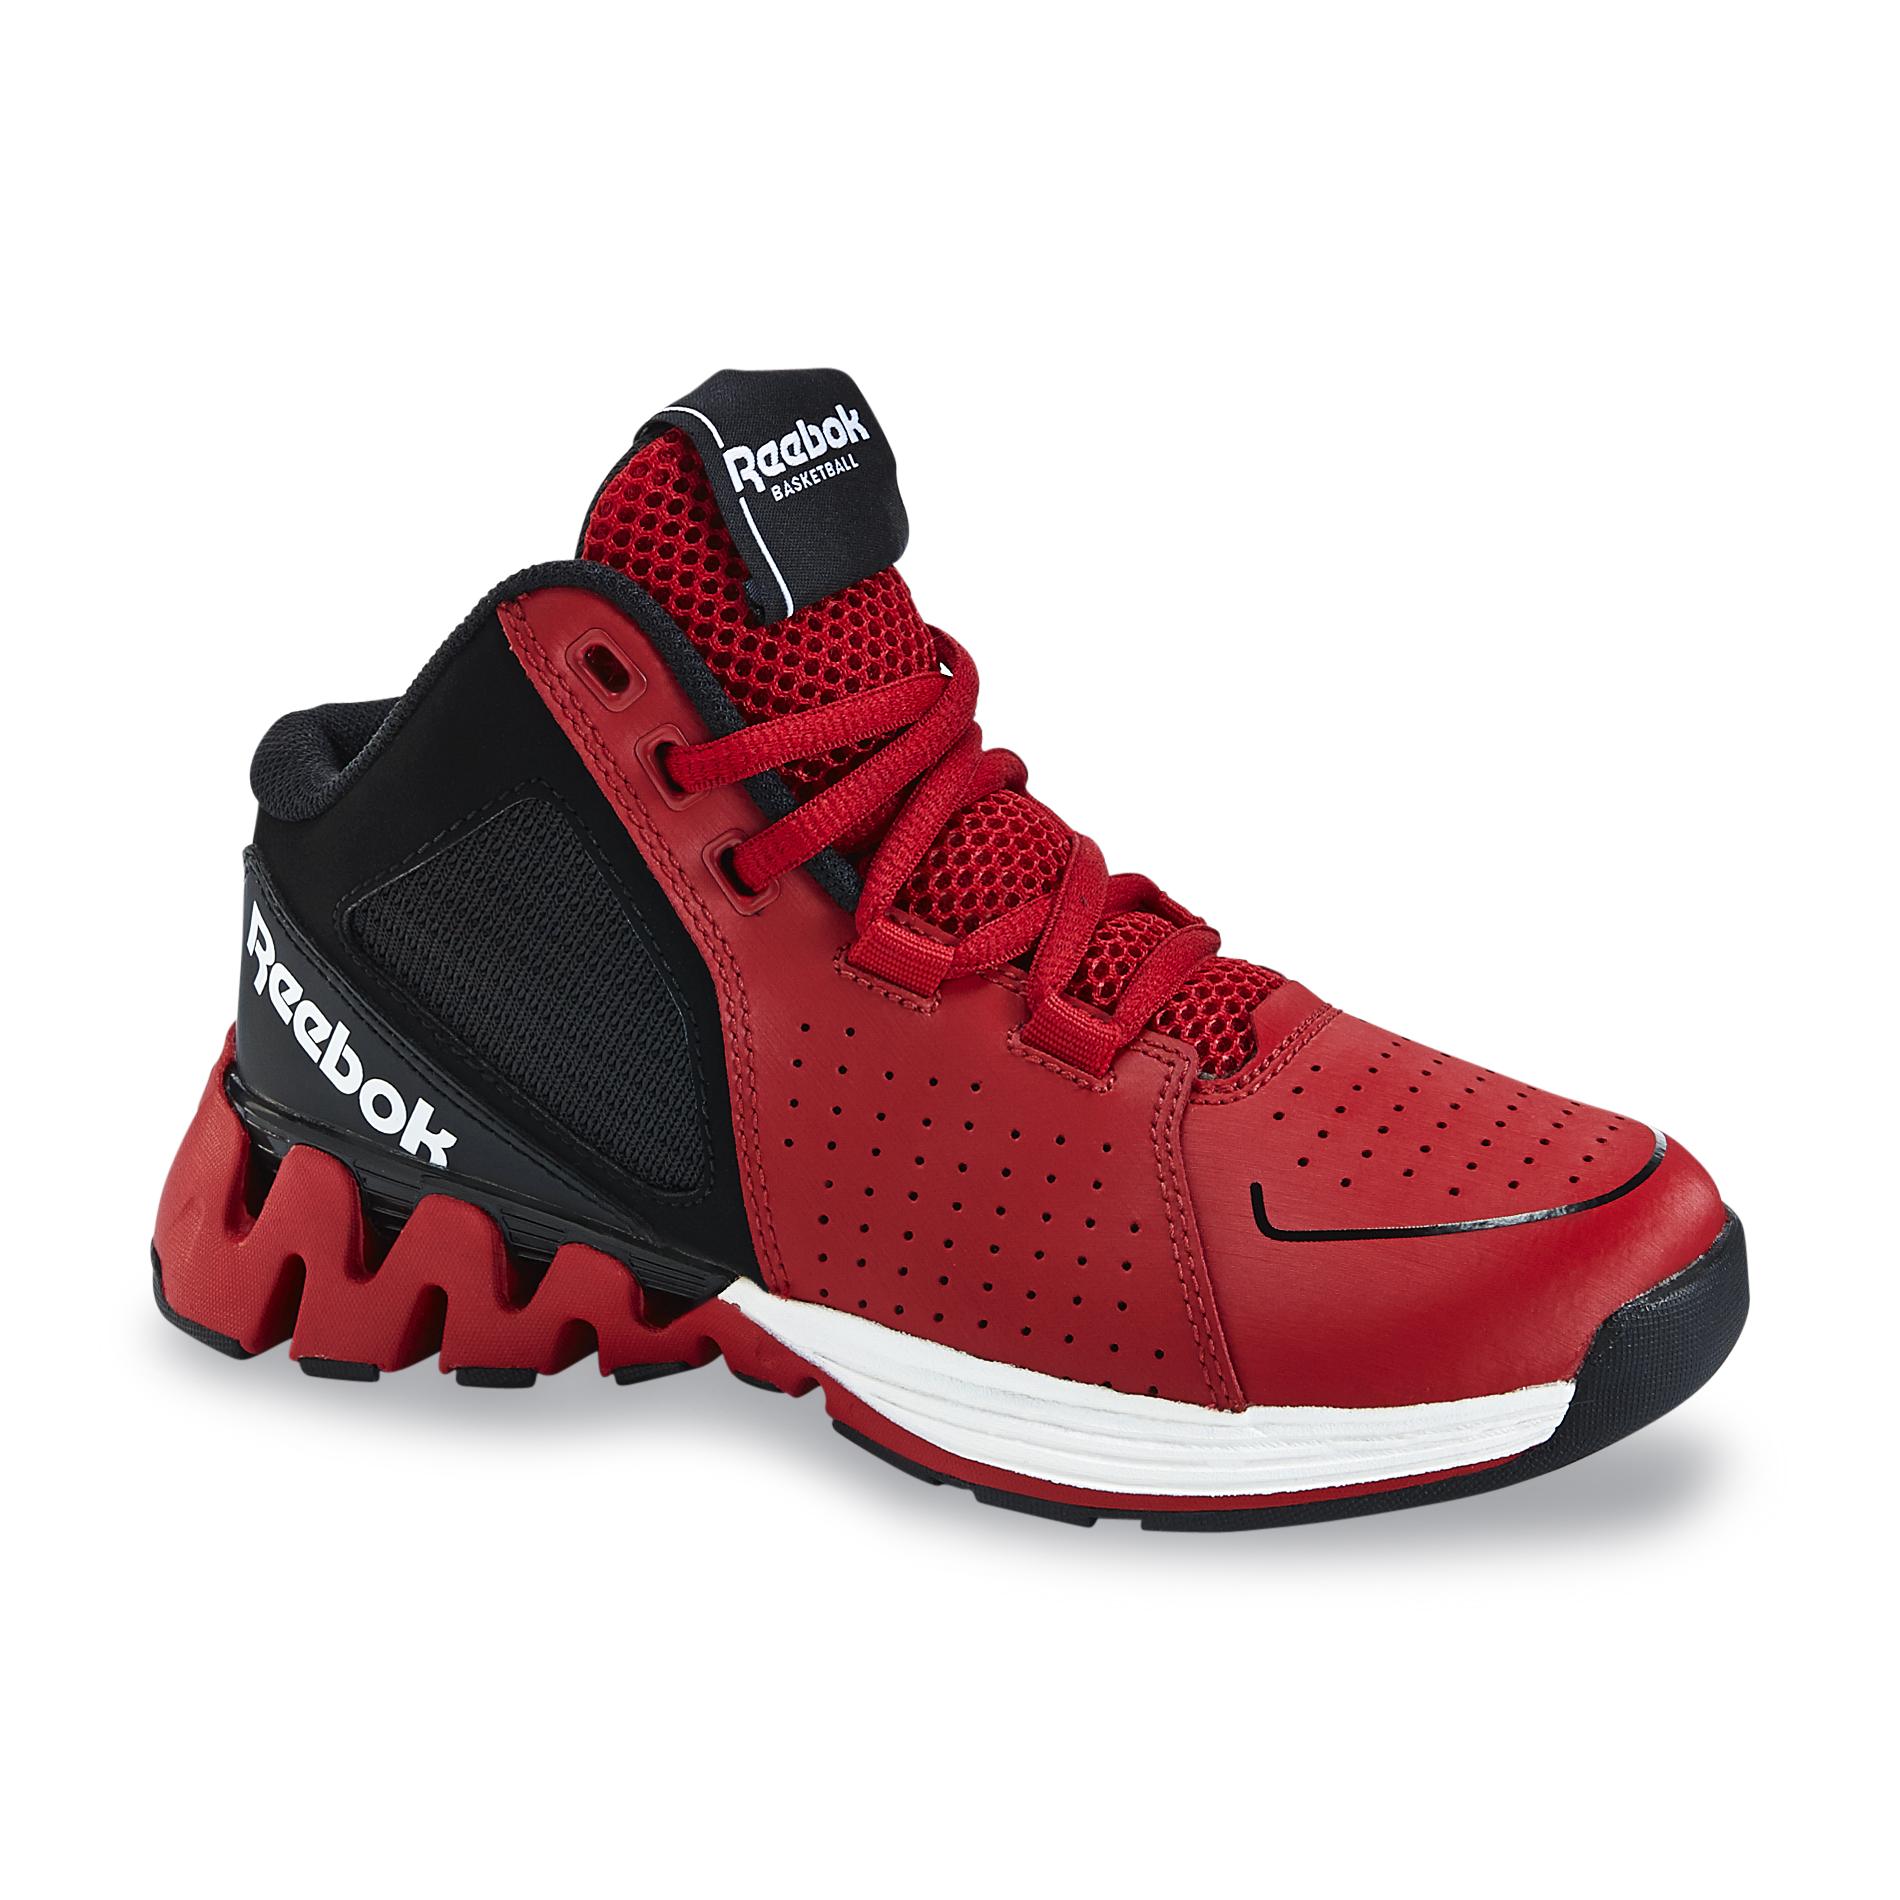 Reebok Boy's ZigKick Red/Black Basketball Shoes